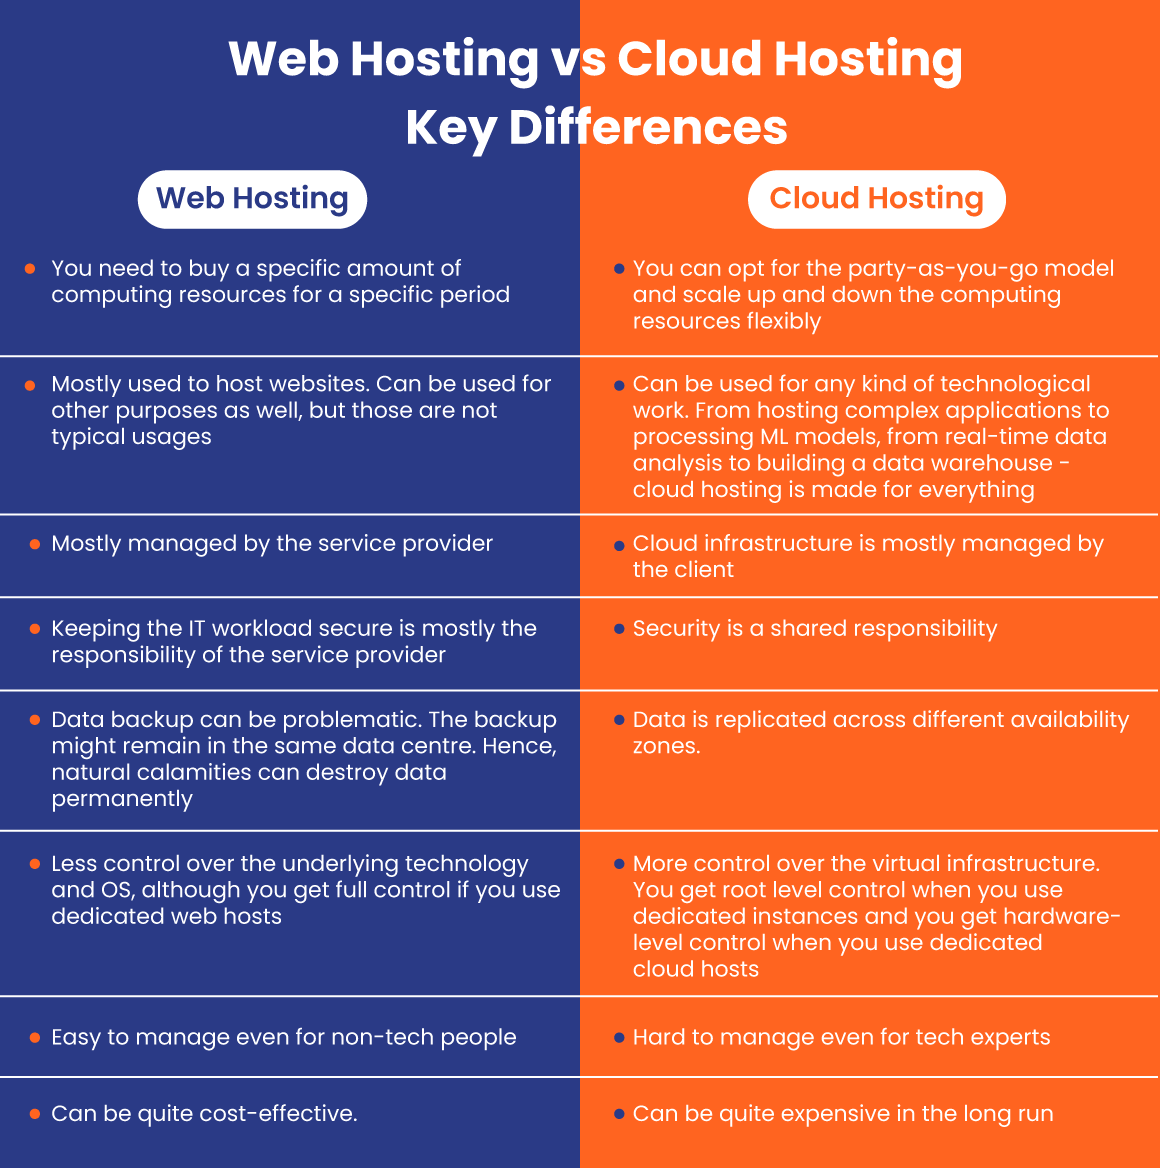 Web Hosting vs. Cloud Hosting Key Differences